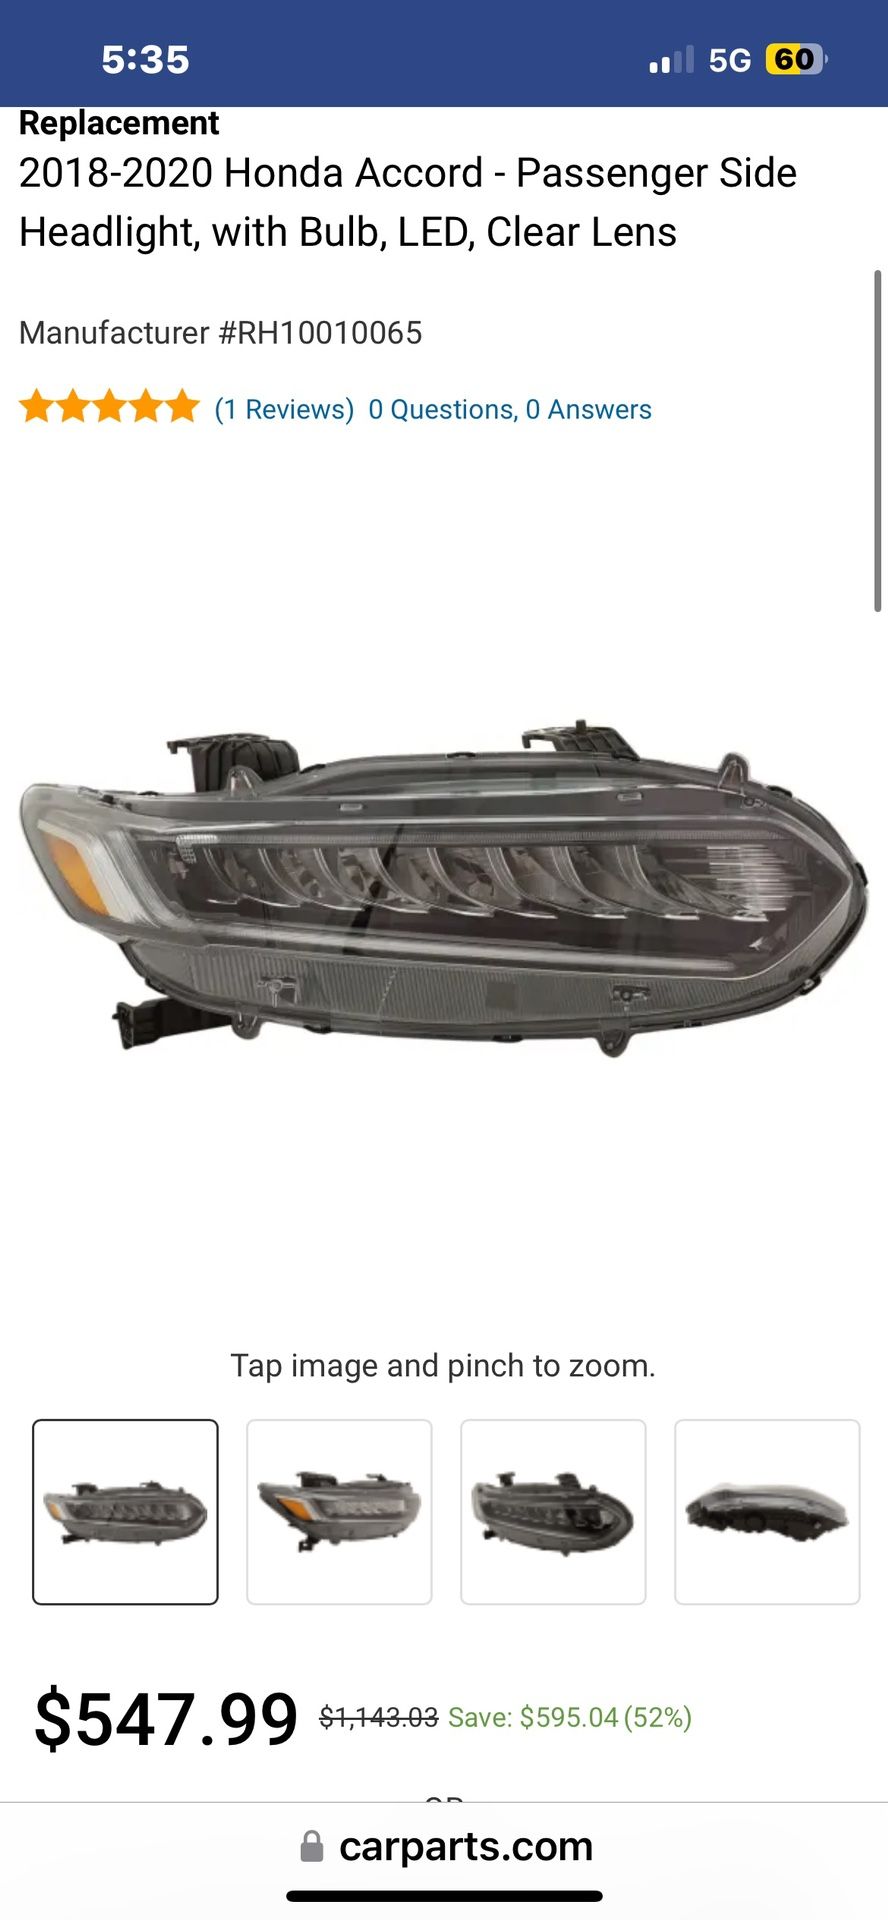 2018-2020 Honda Accord - Passenger Side Headlight, with Bulb, LED, Clear Lens